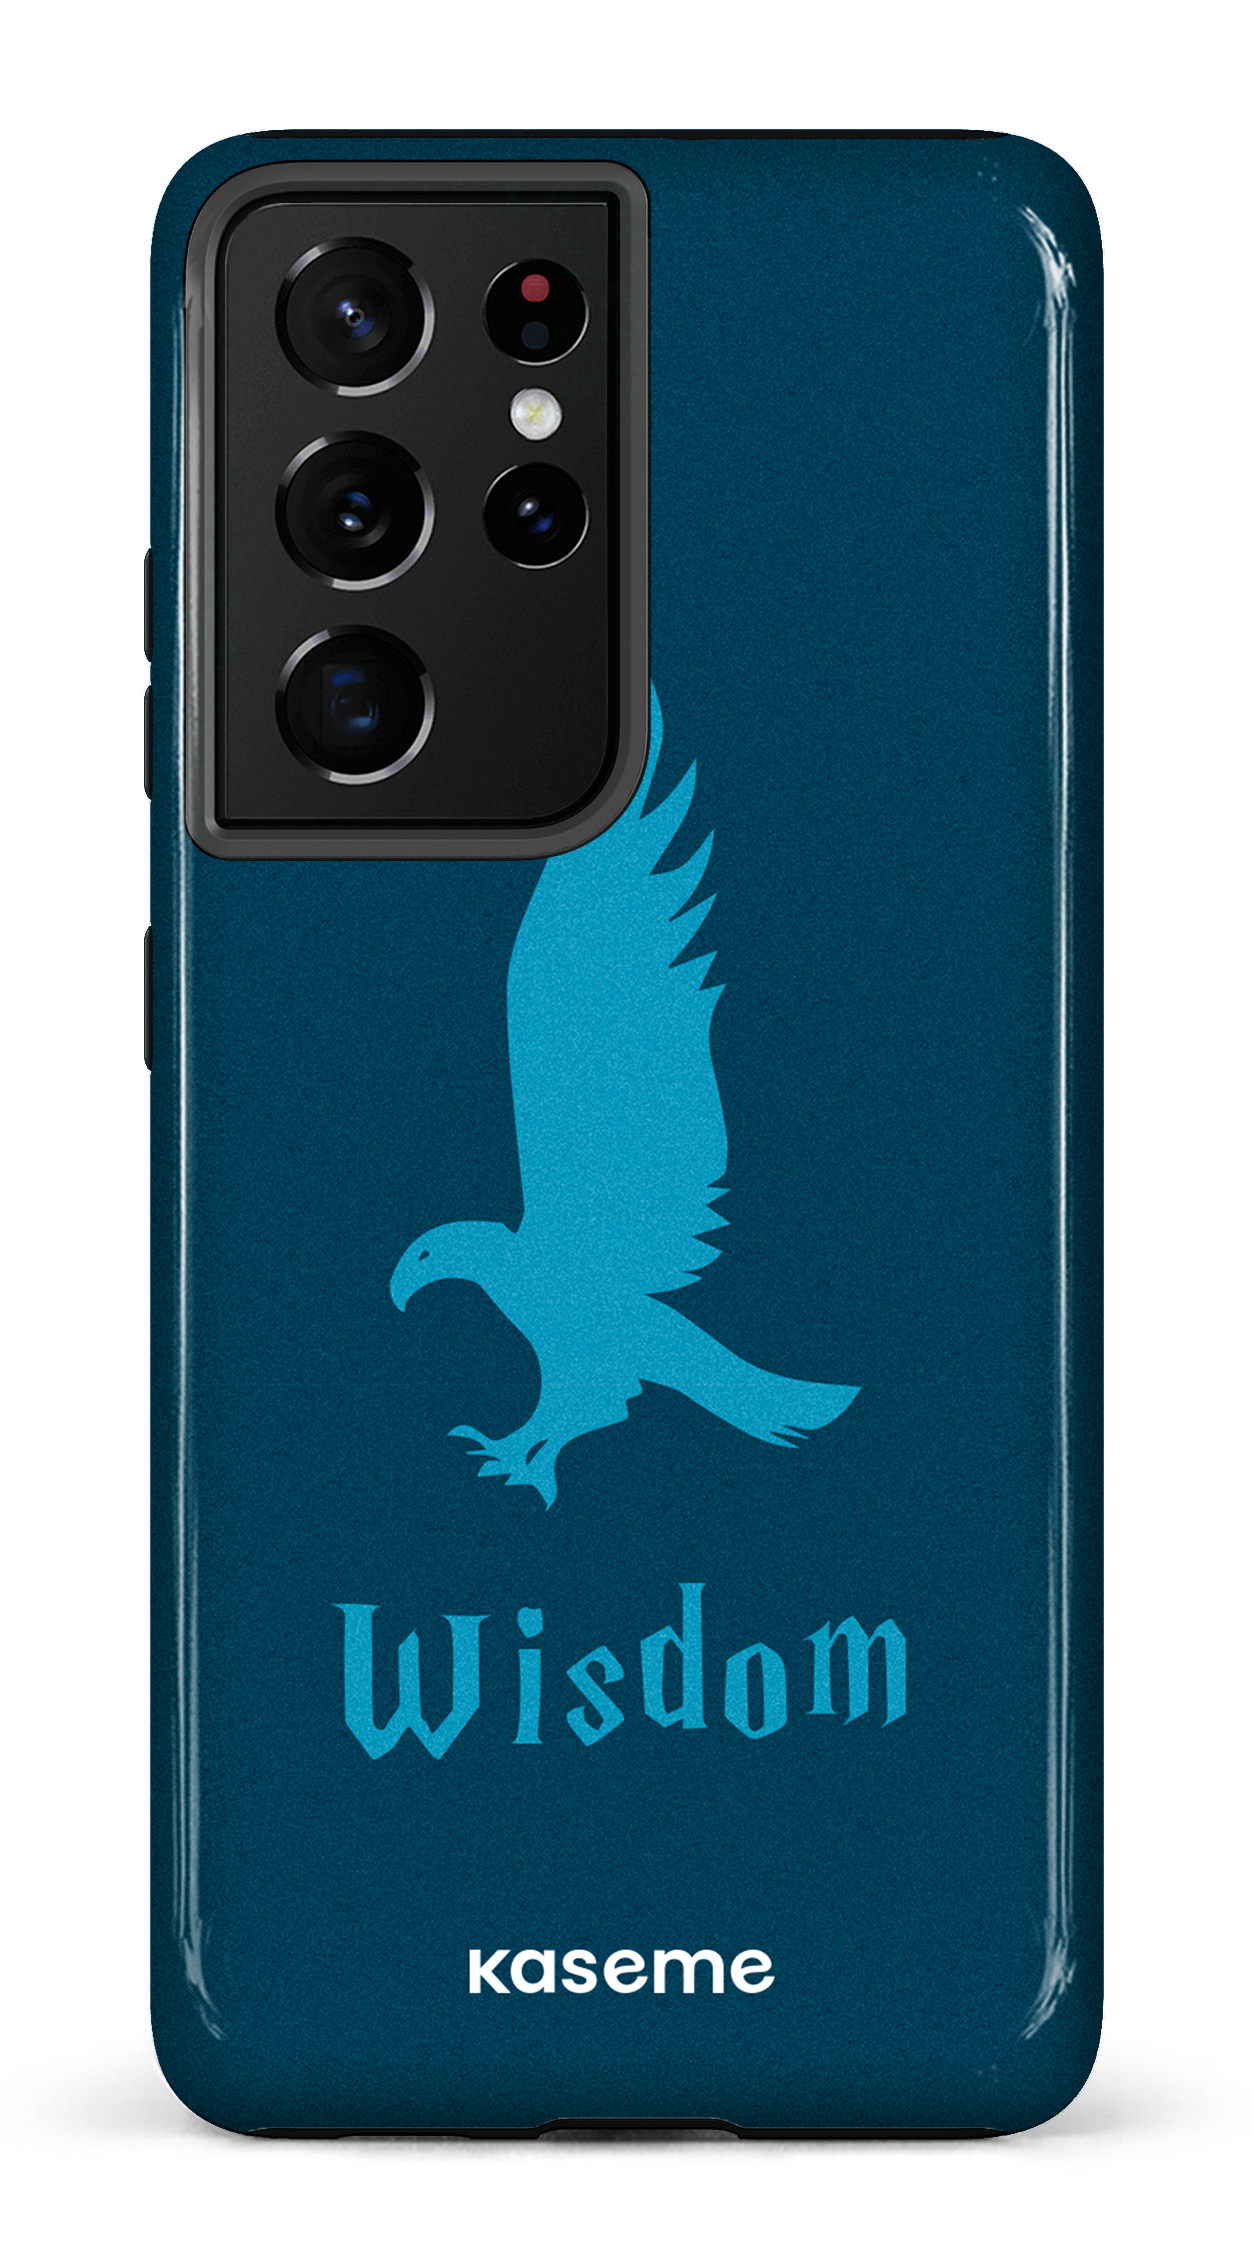 Wisdom - Galaxy S21 Ultra